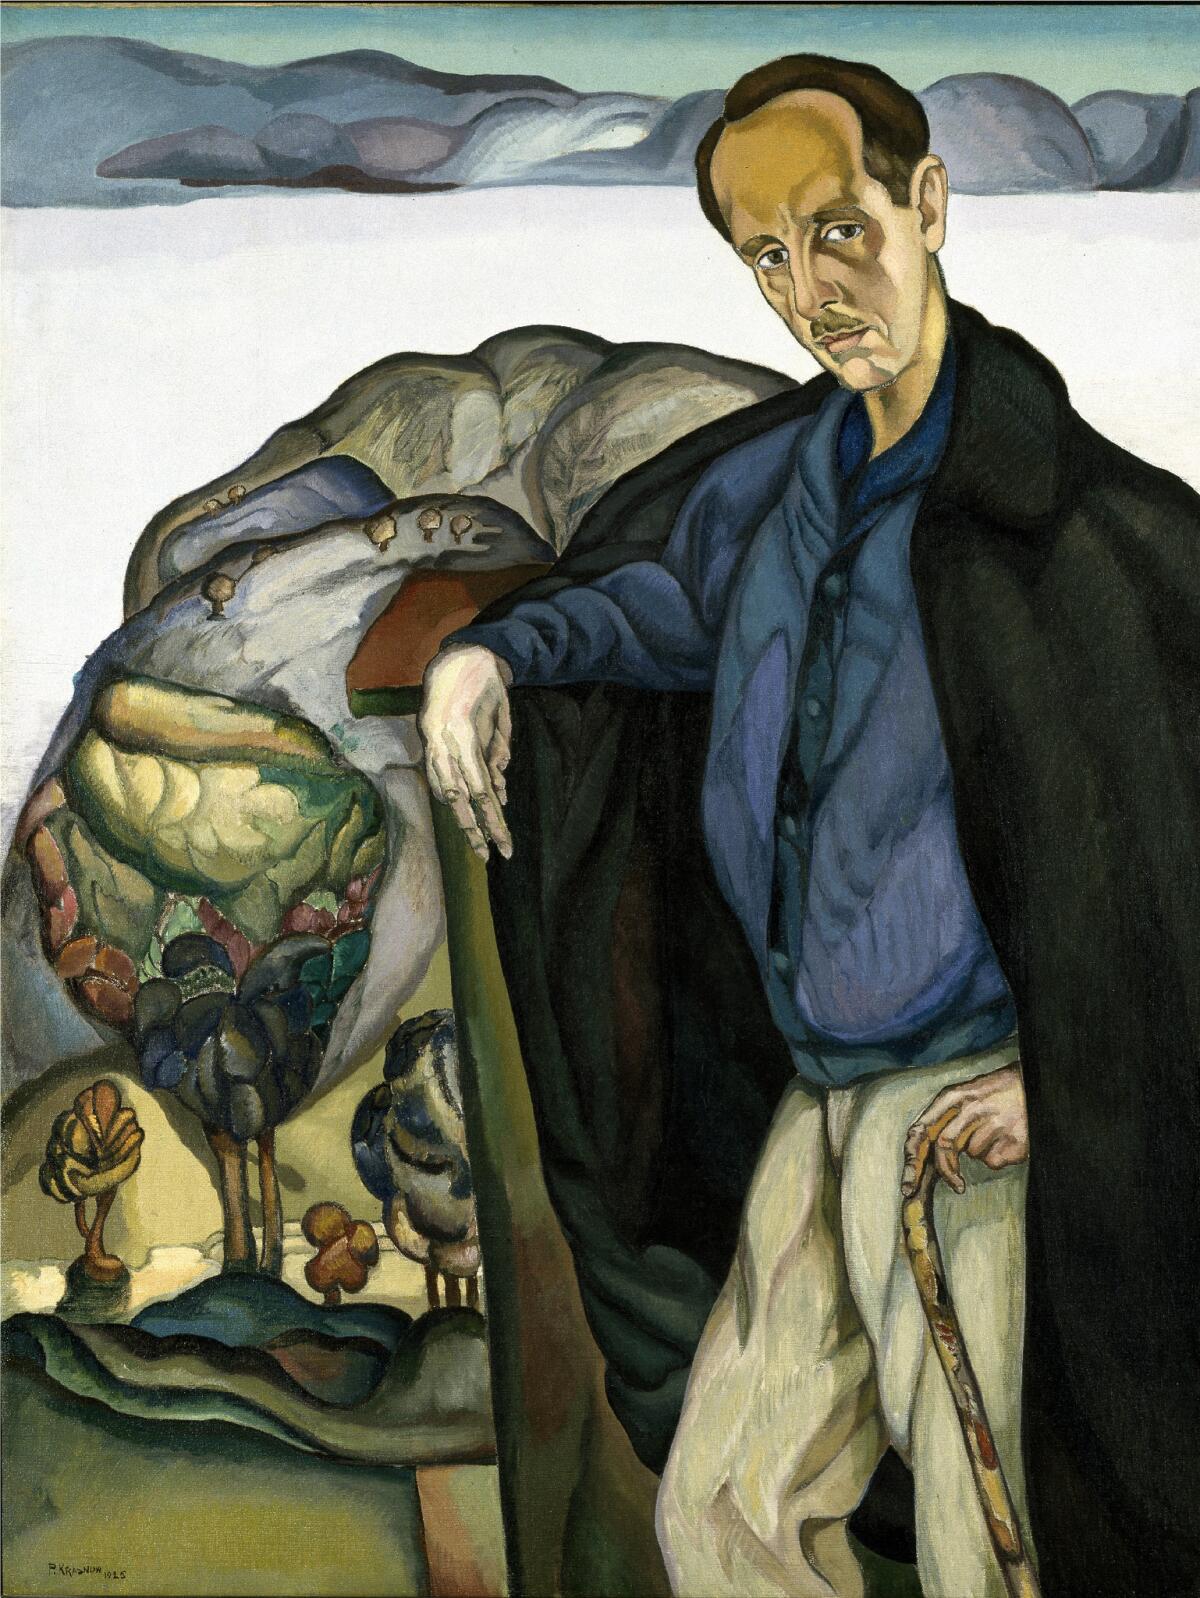 Peter Krasnow, "Edward Henry Weston," 1925, oil on canvas (Laguna Art Museum)